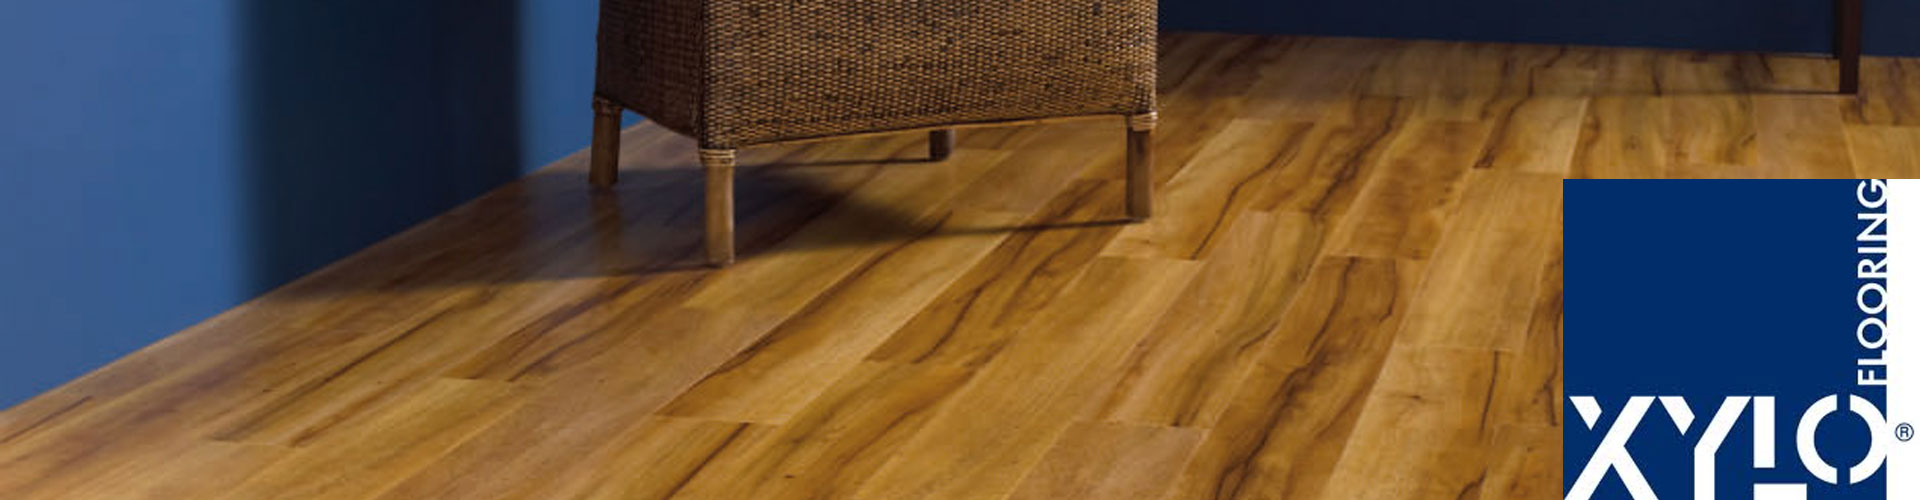 Wooden Flooring Derby | The Derbyshire Carpet & Flooring Company